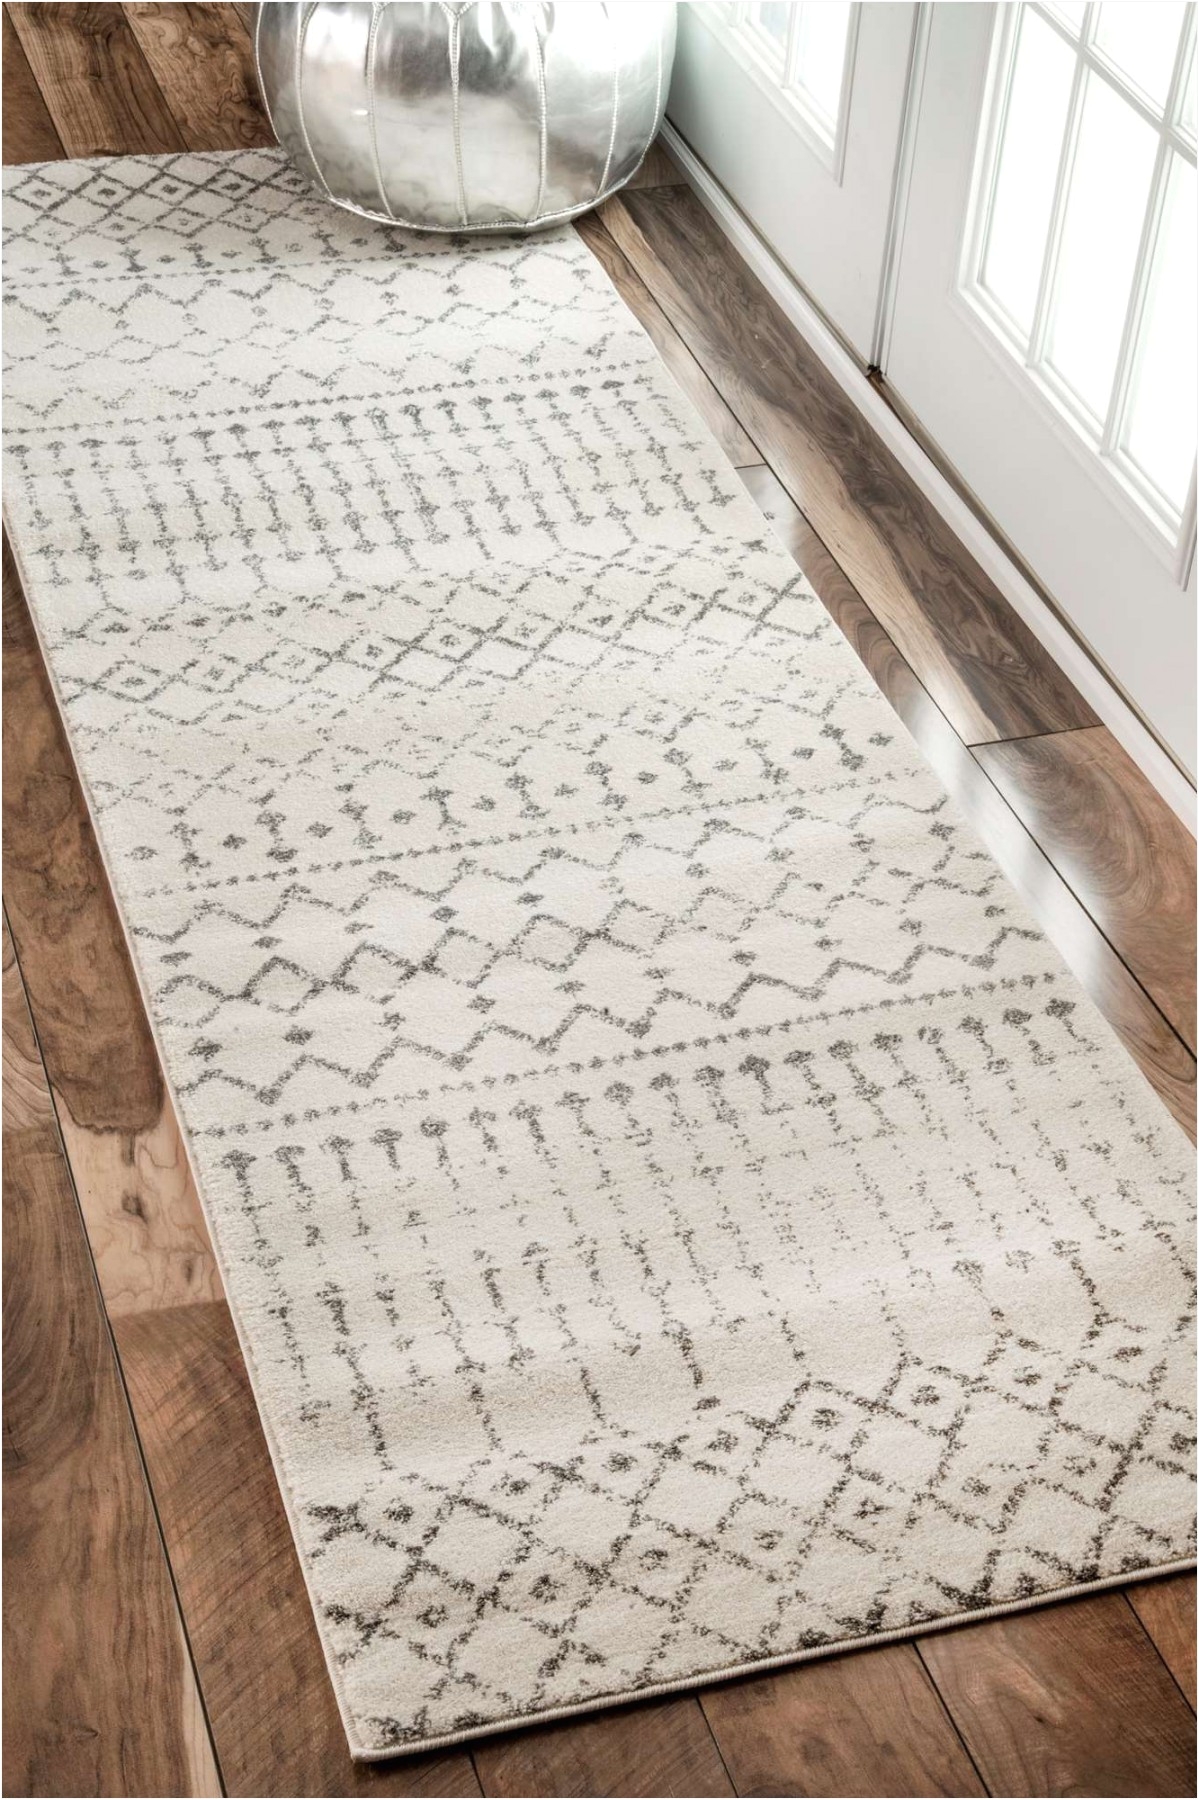 round area rugs kohl s best of elegant moroccan trellis area rug pics